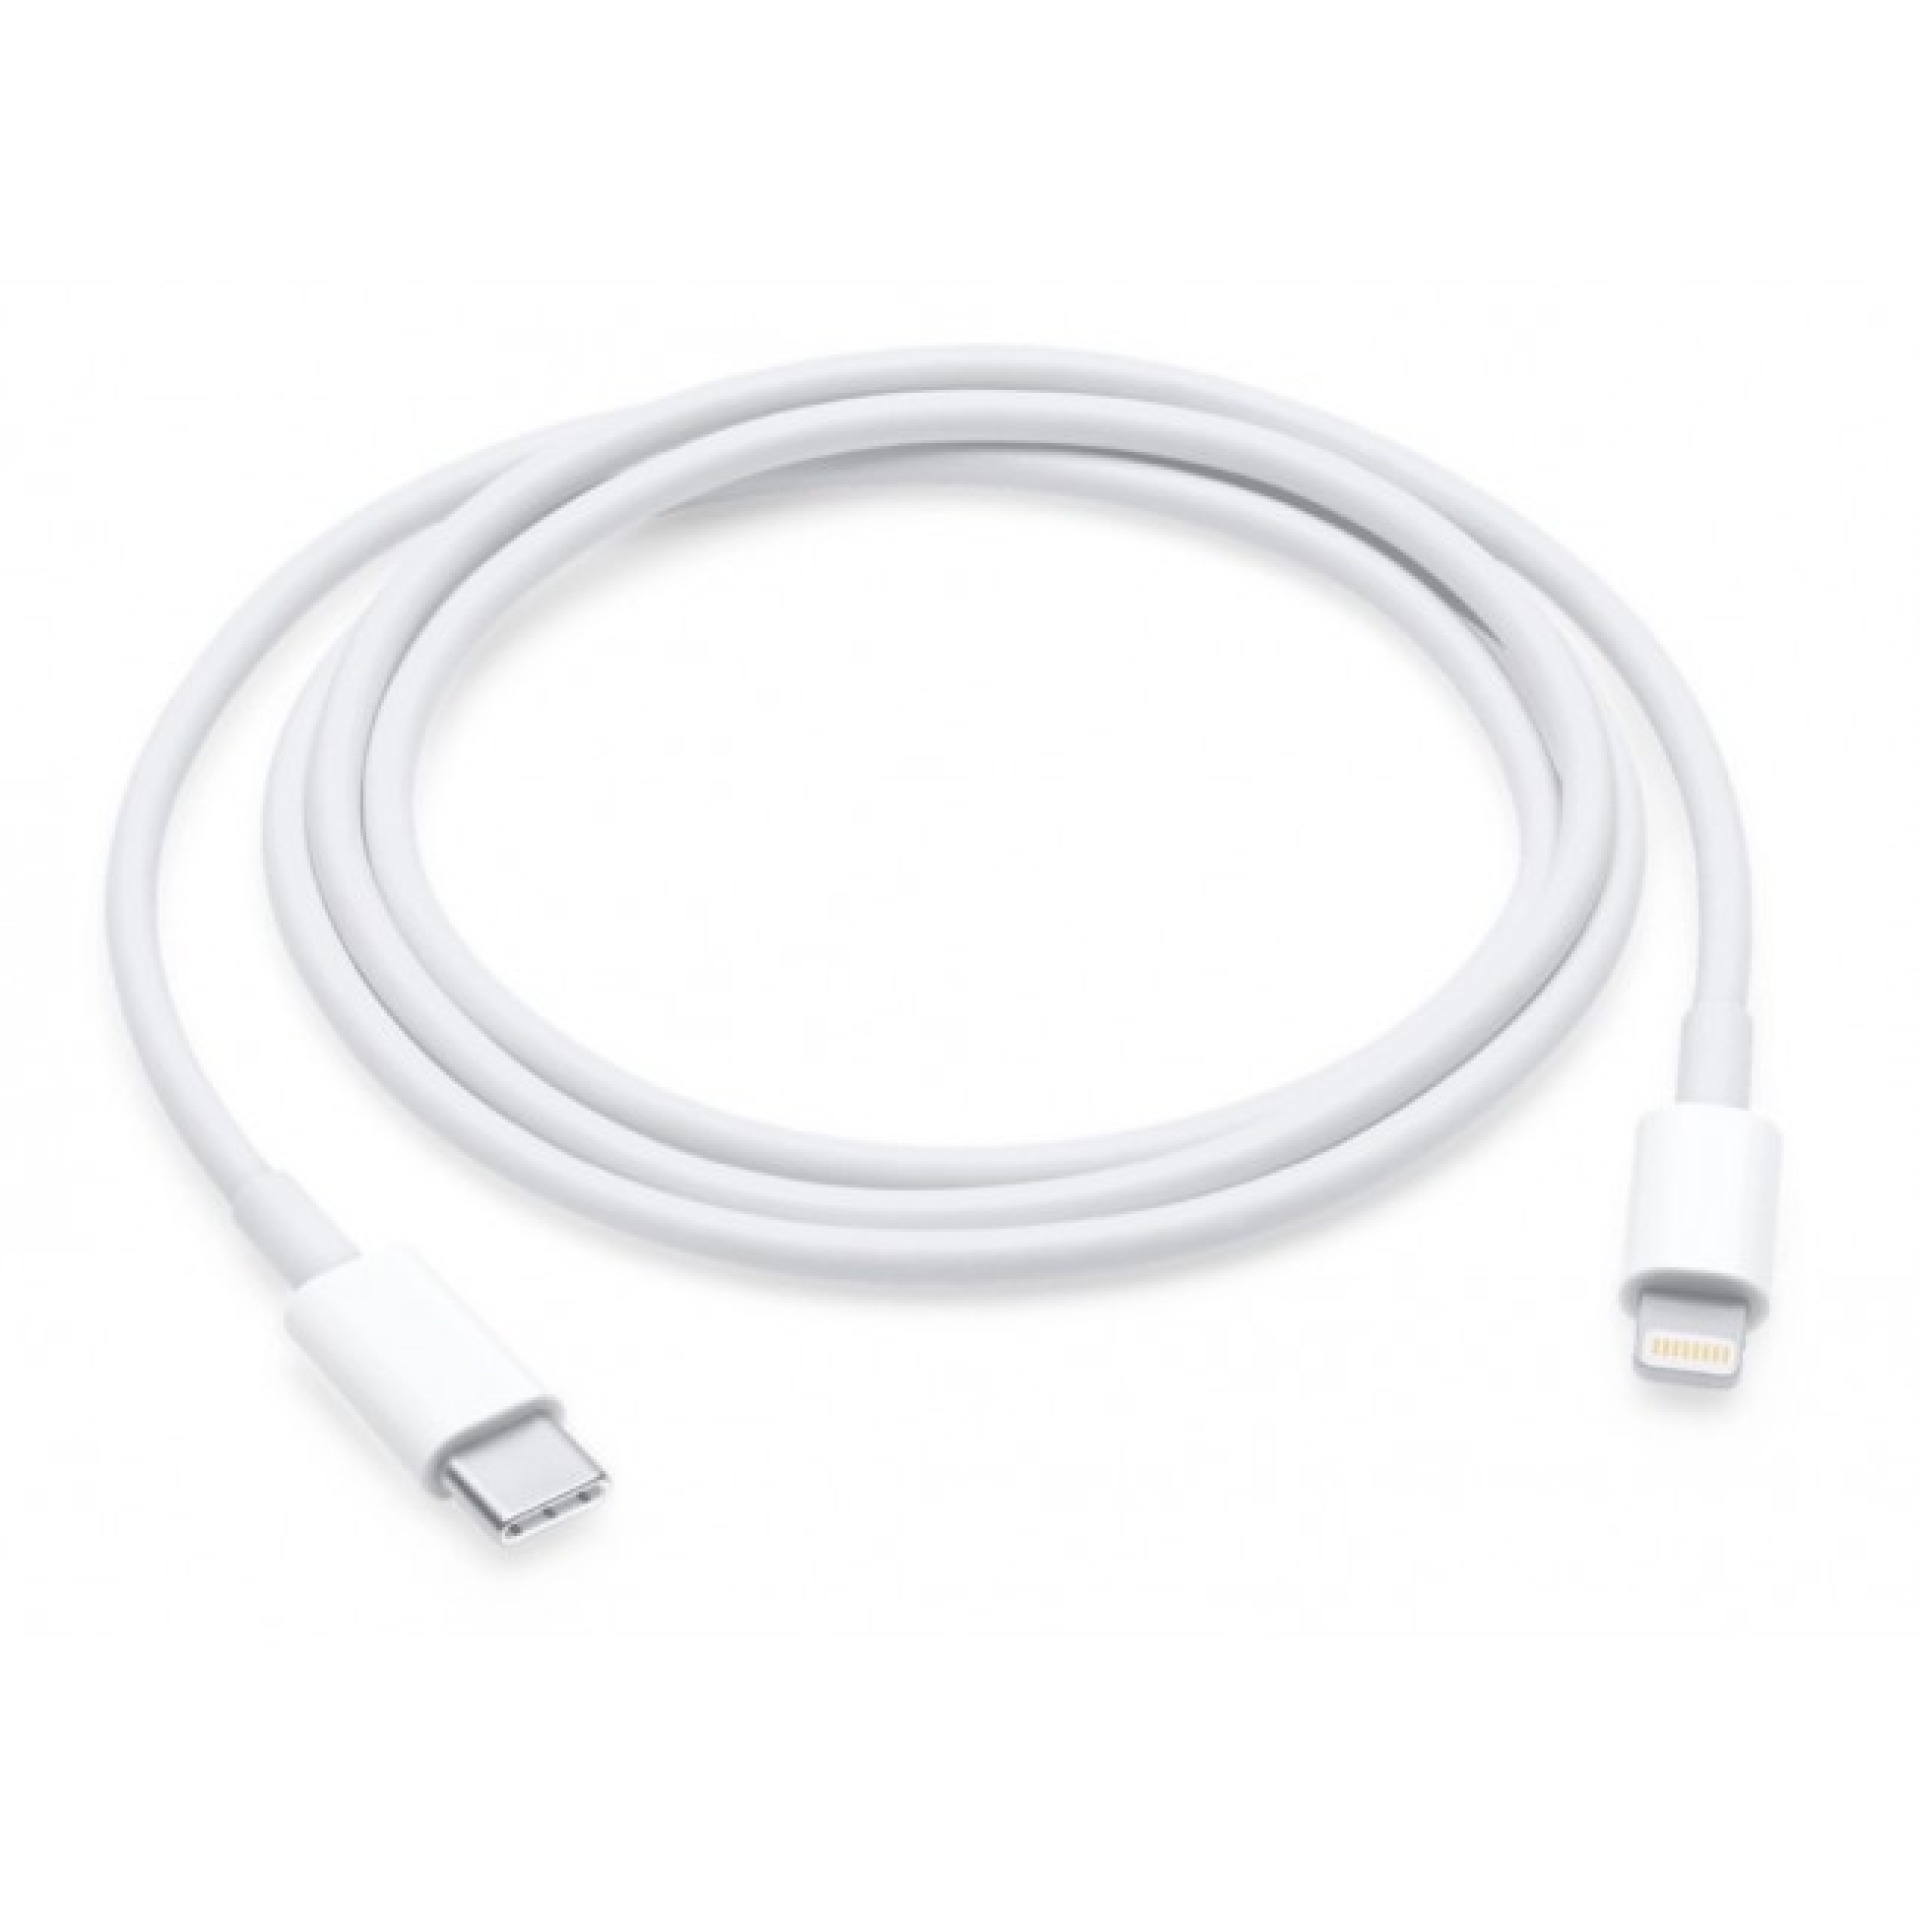 USB2.0 Cable Type C - Lightning, white 1m